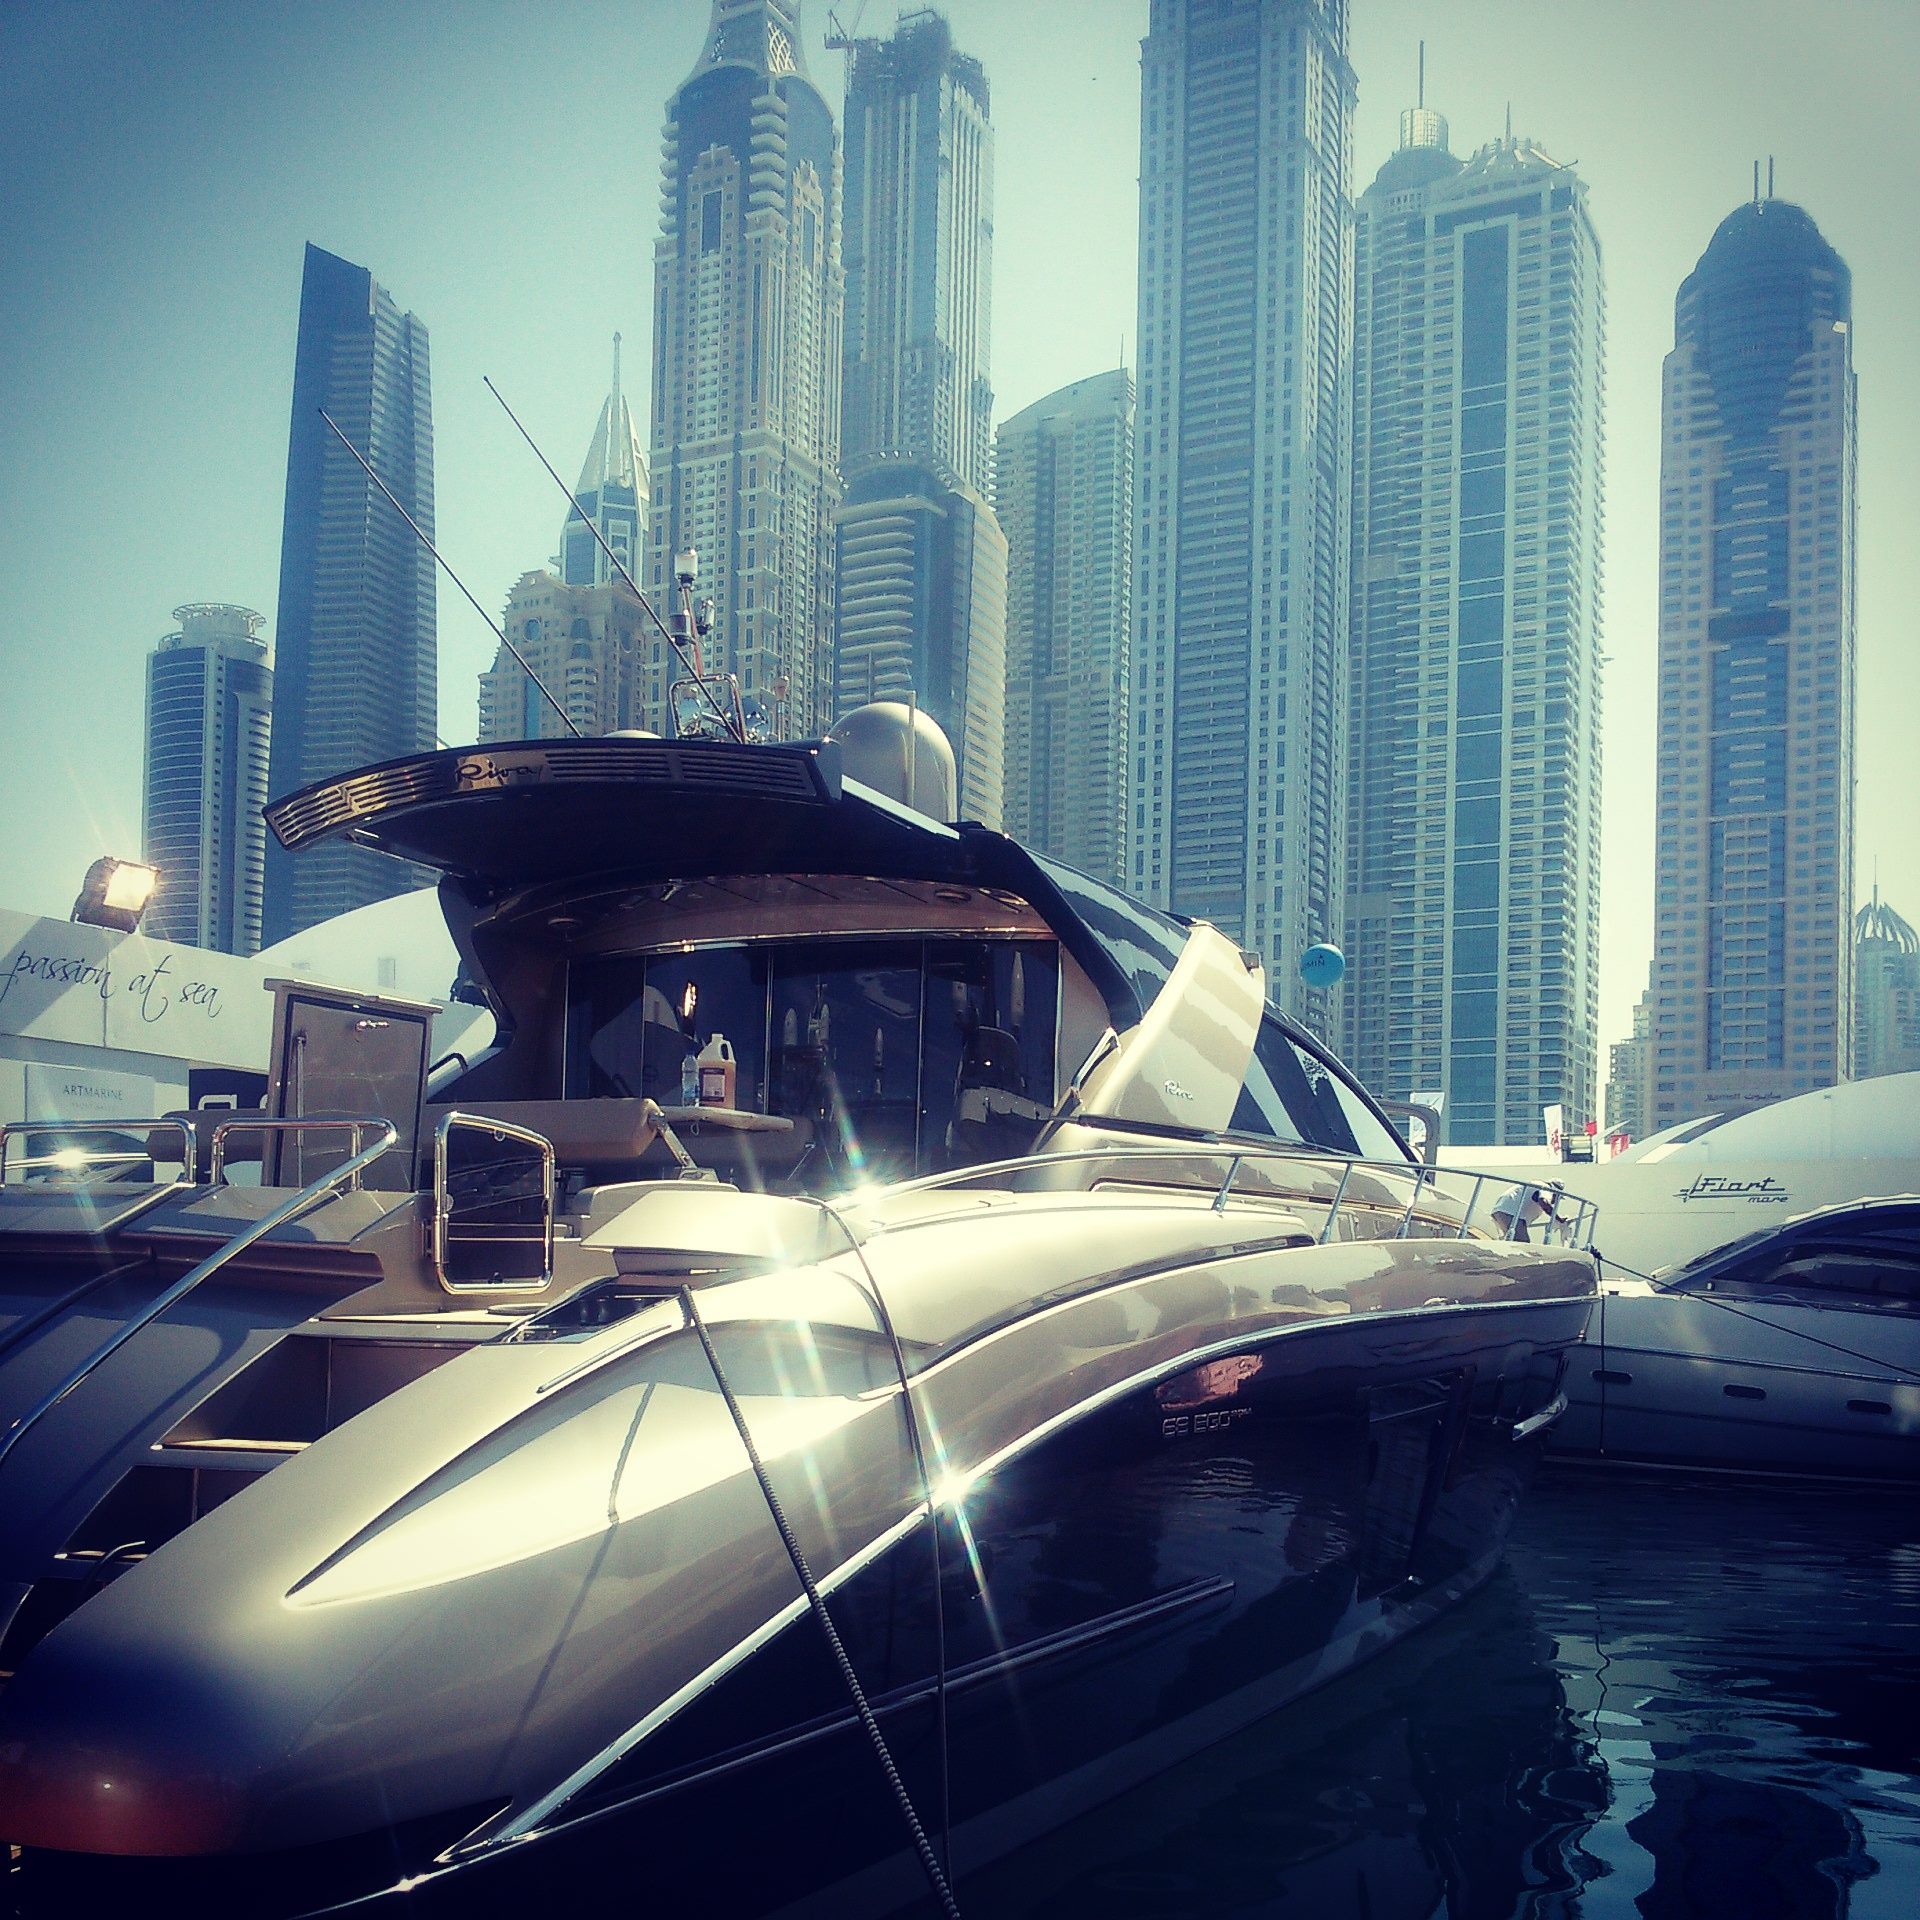 Dubai International Boat Show 2015